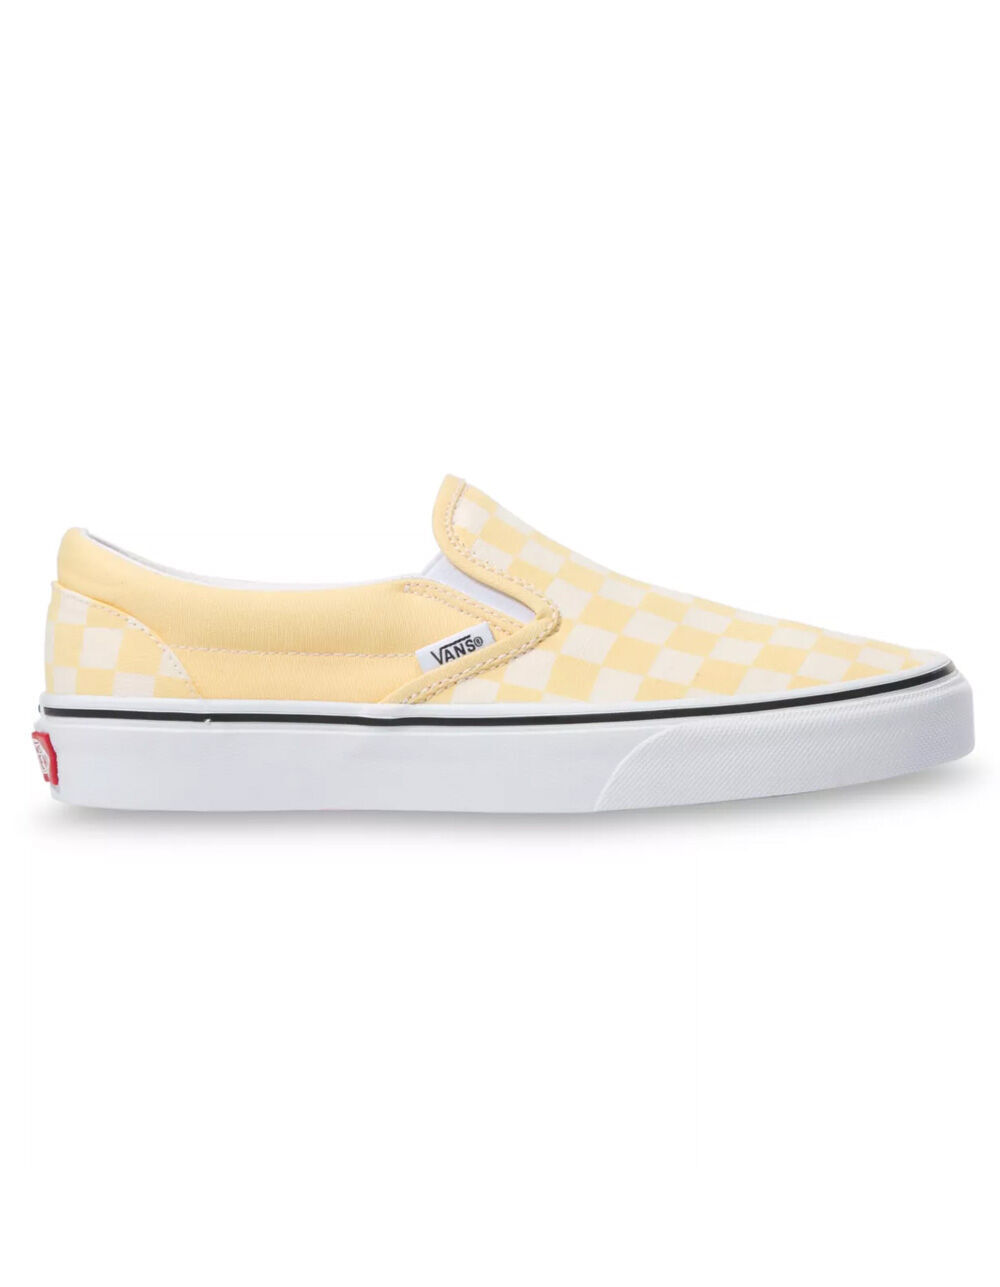 Vans, Shoes, Vans Ltd Ed Yellow Classic Checkered Slipon Flax True White